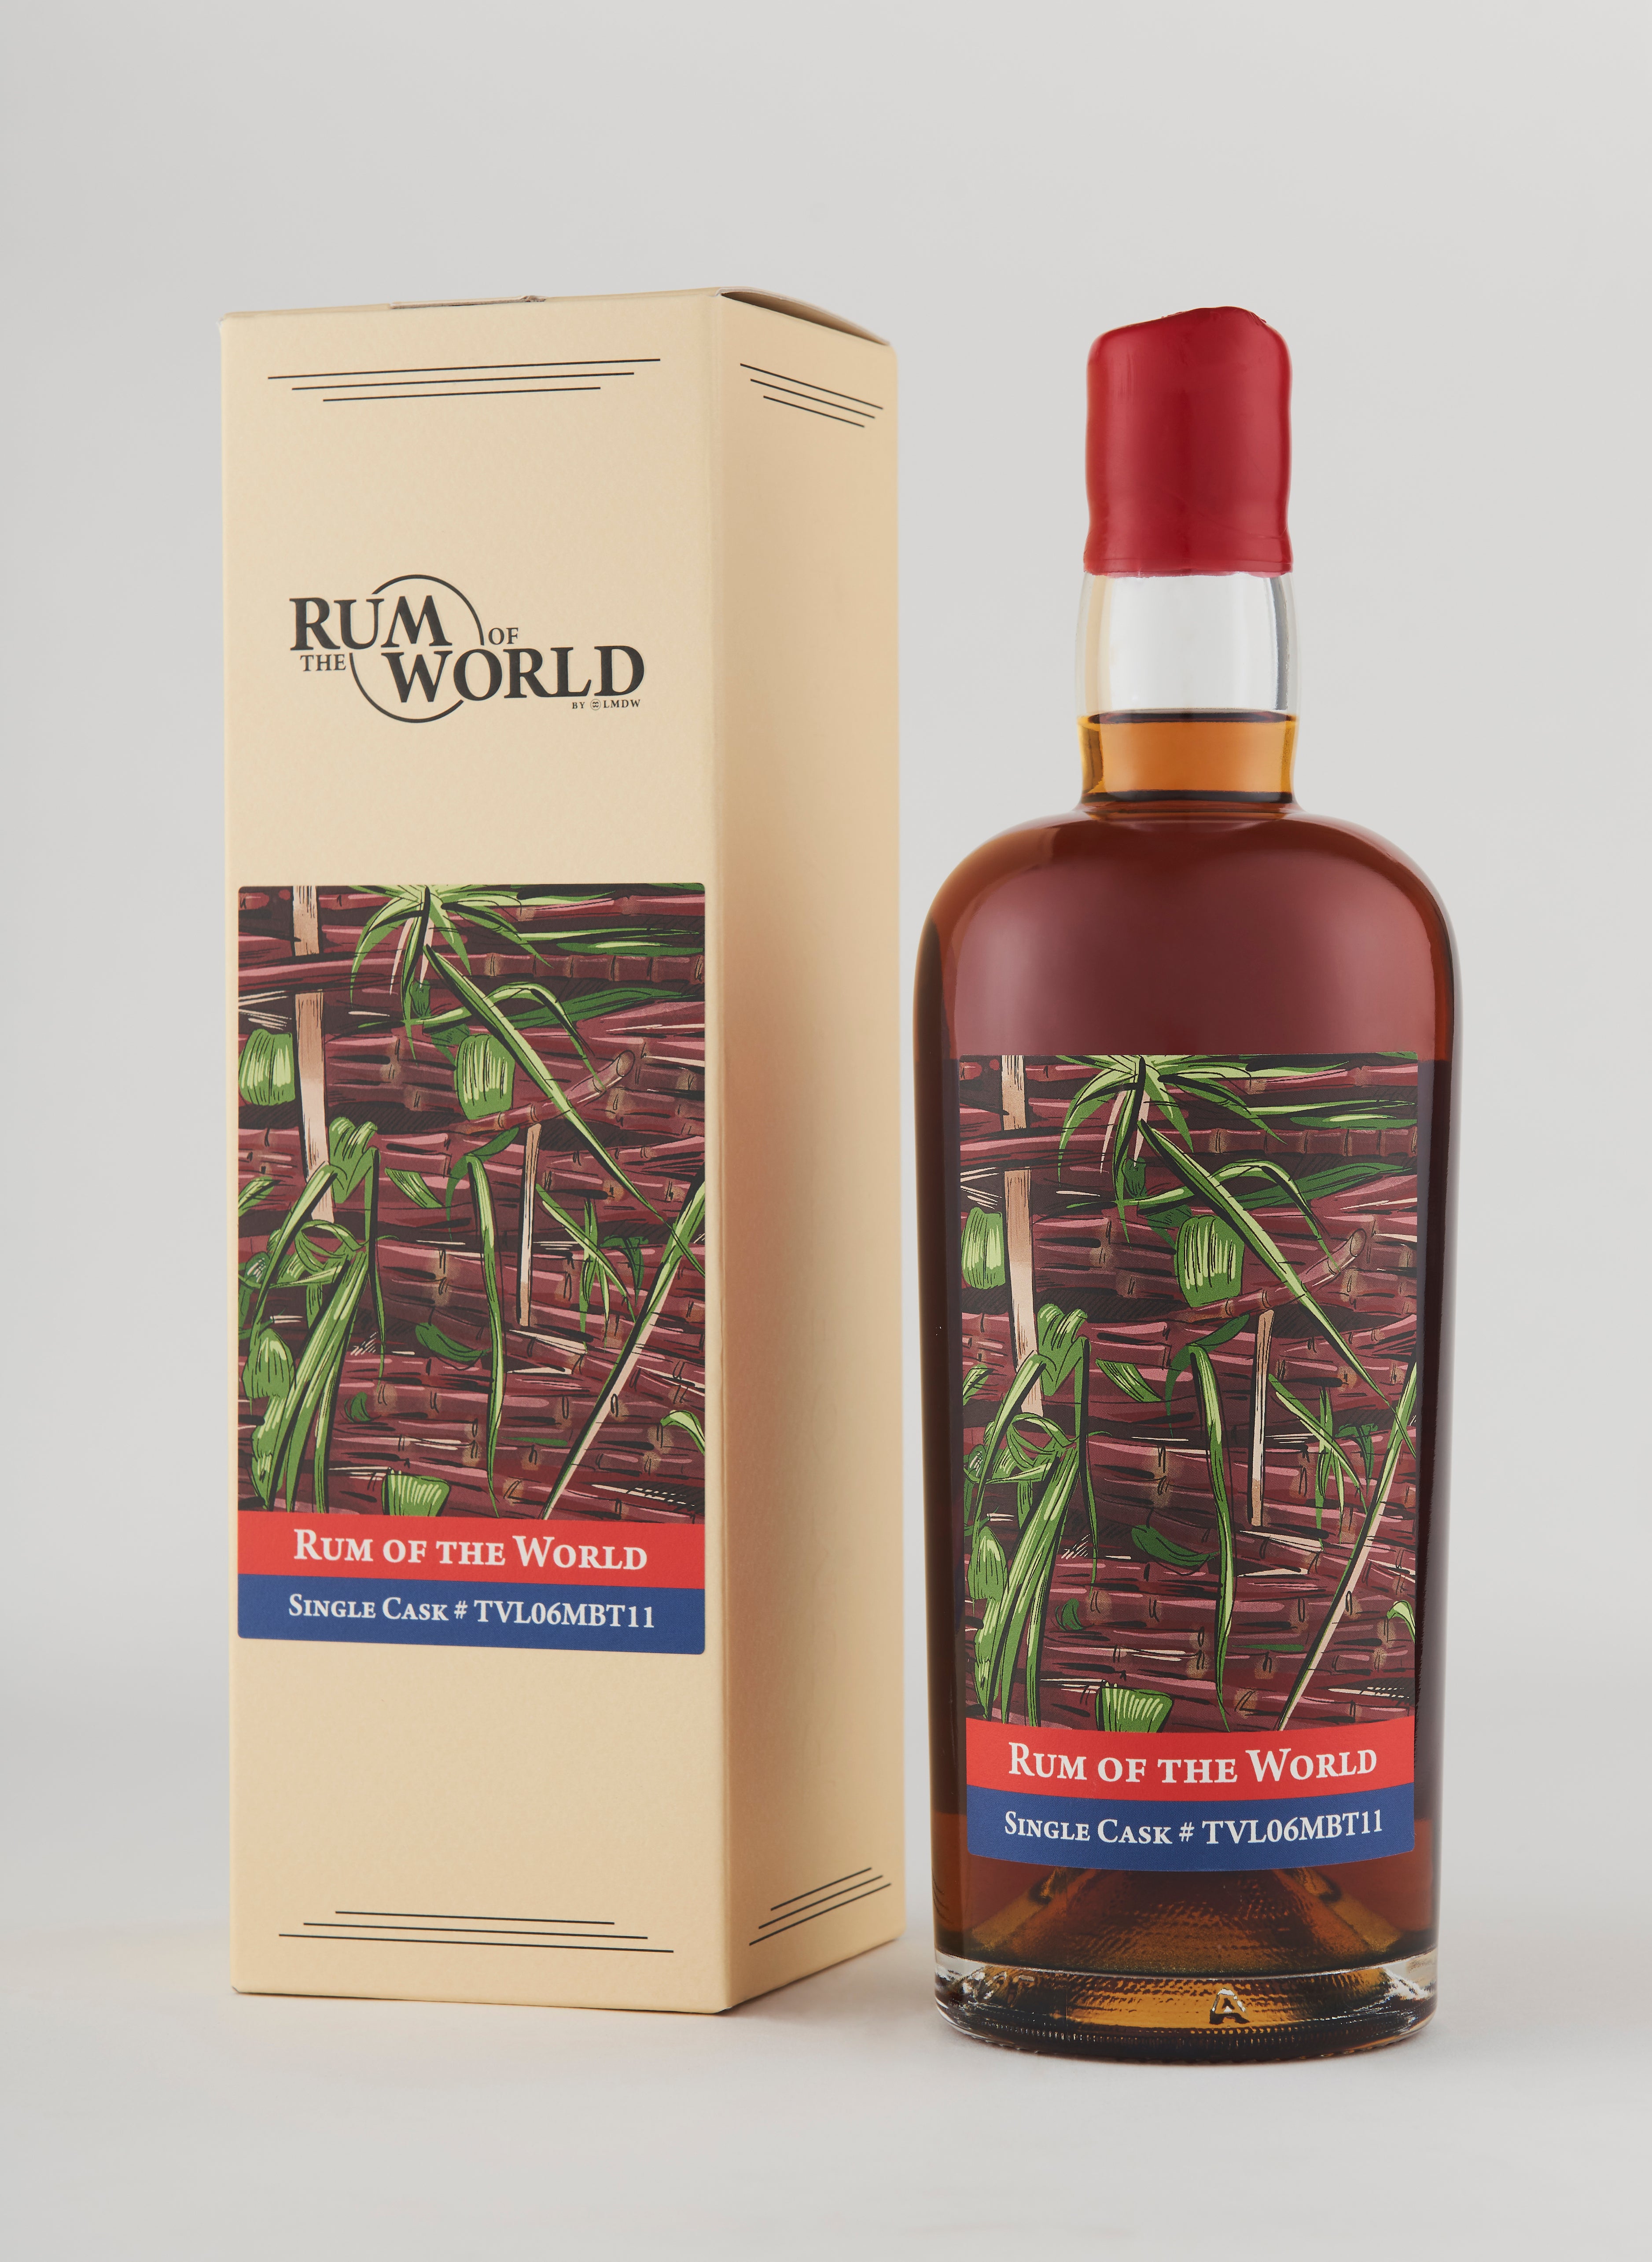 003: Belize 🇧🇿 Rum 2006, 14 Years, 65.6%